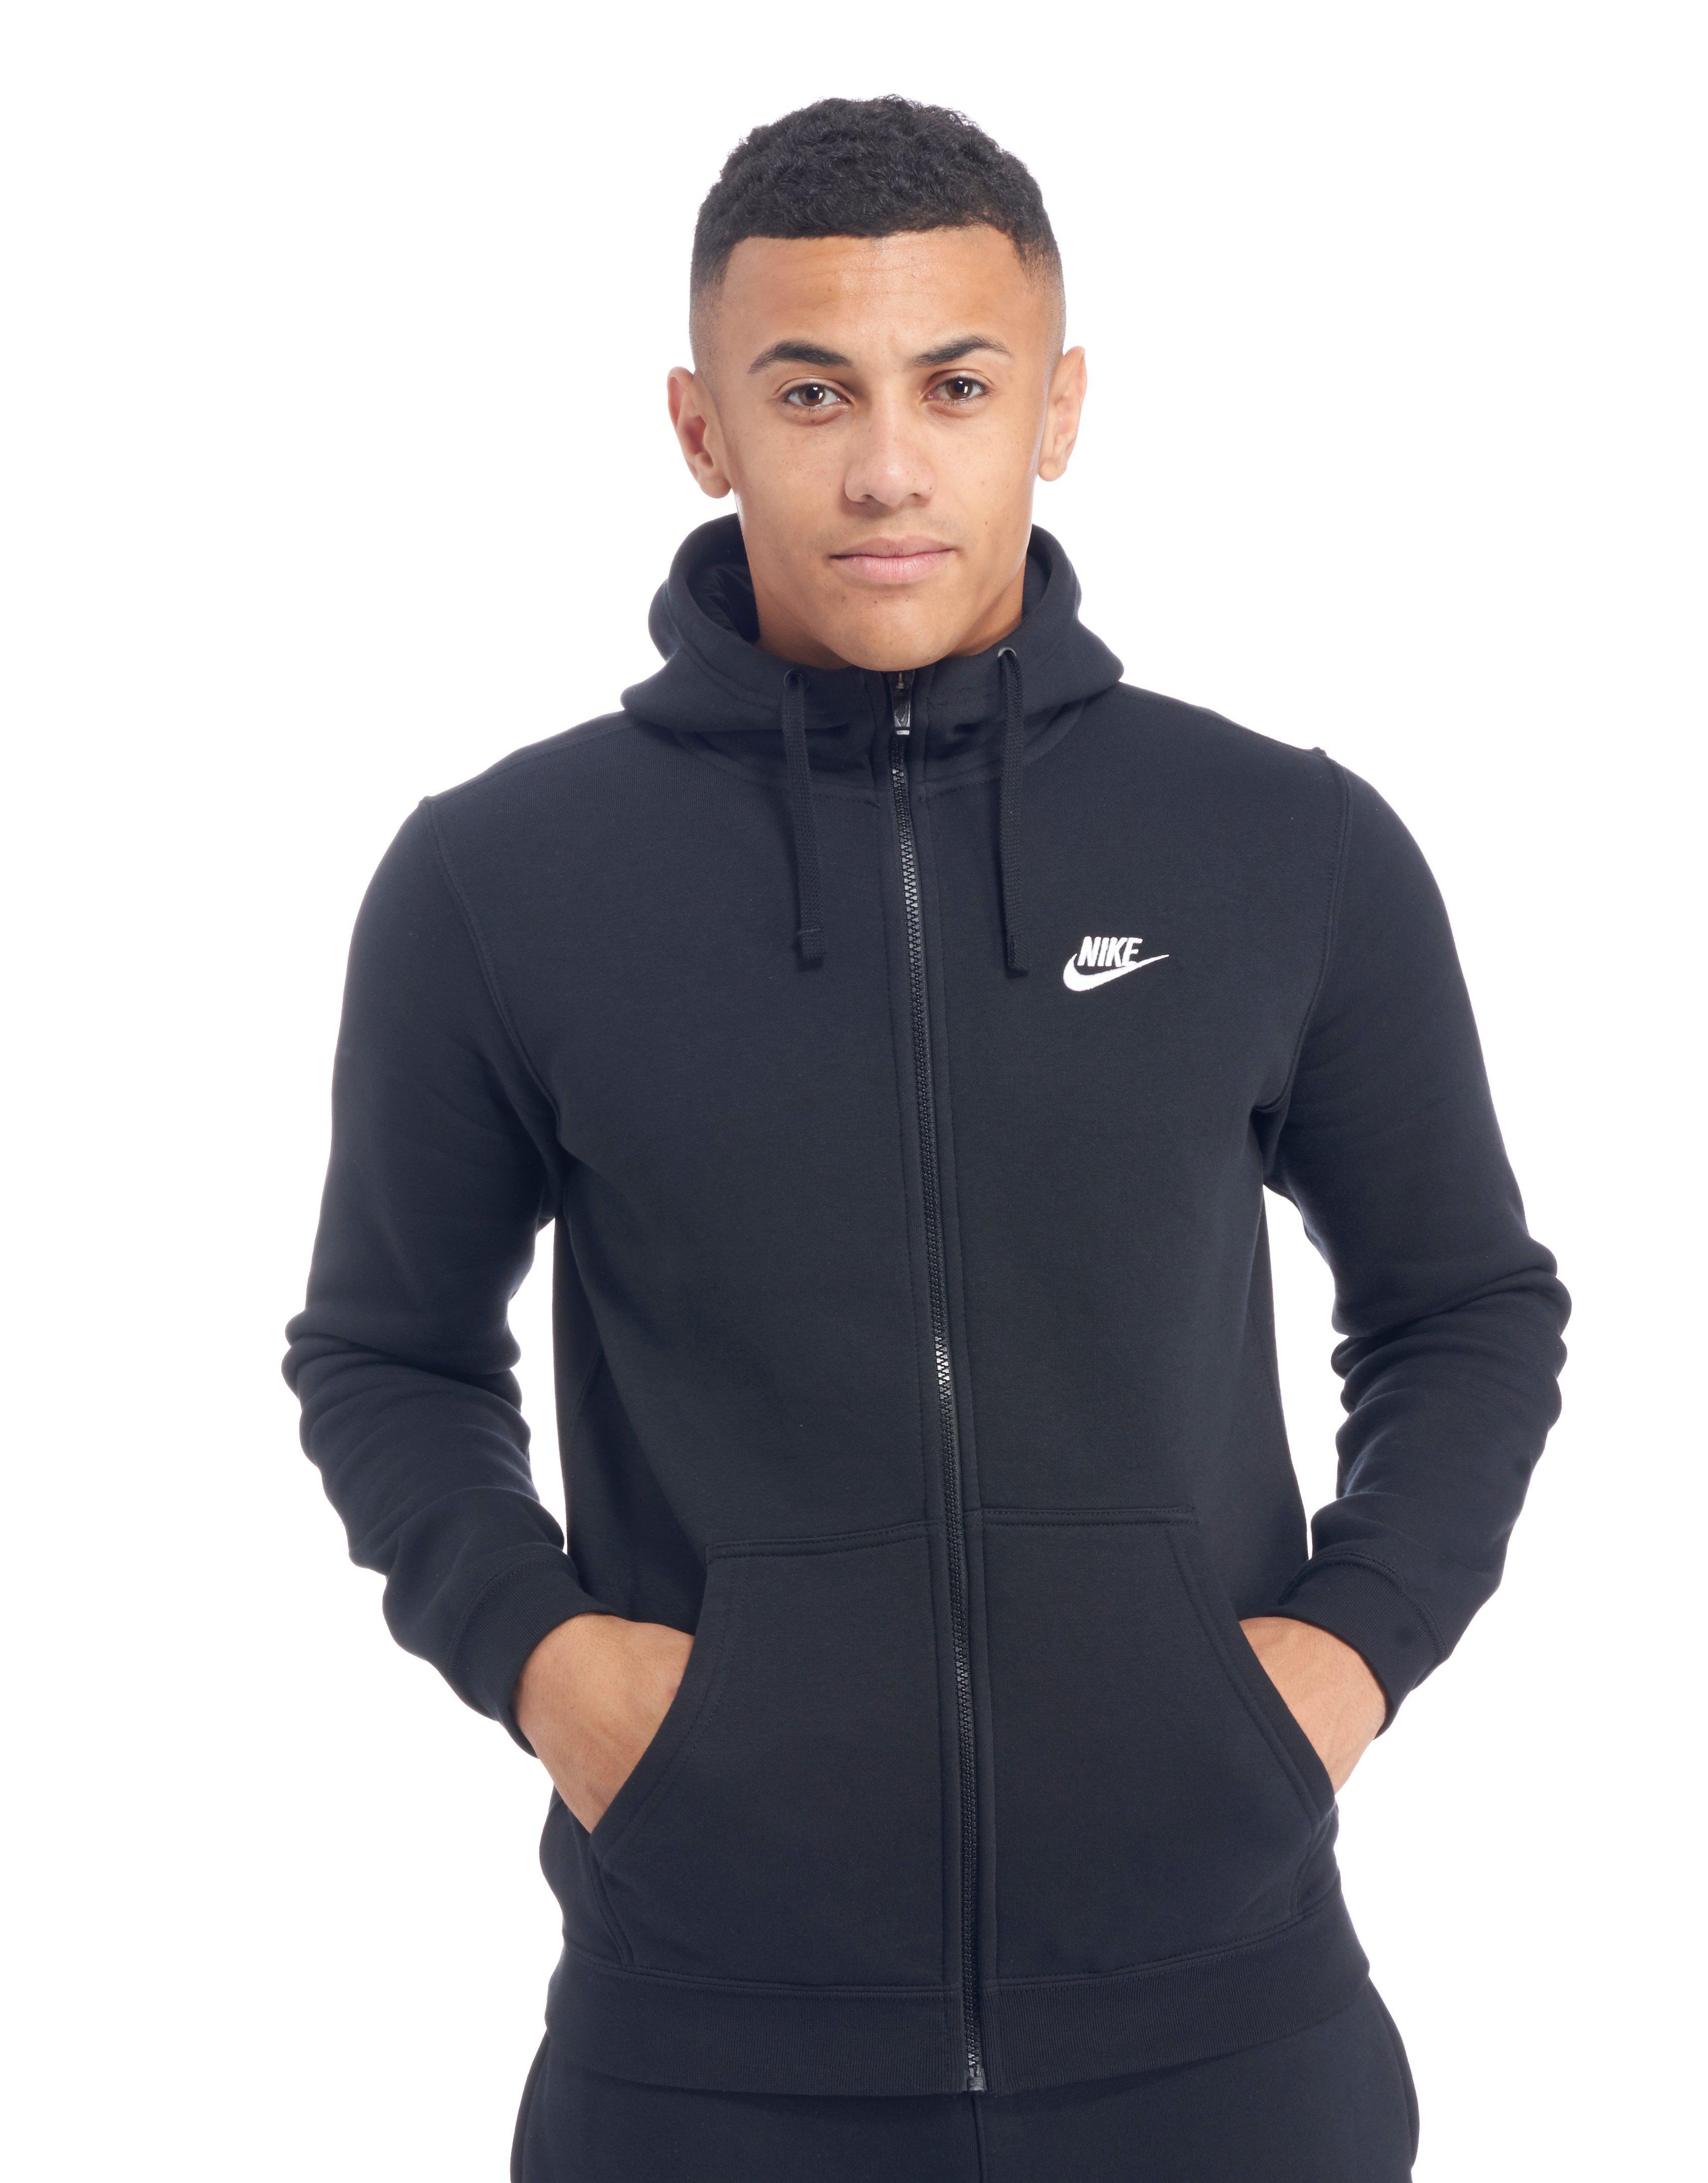 Nike Foundation Fleece Full Zip Hoody in Black for Men - Lyst